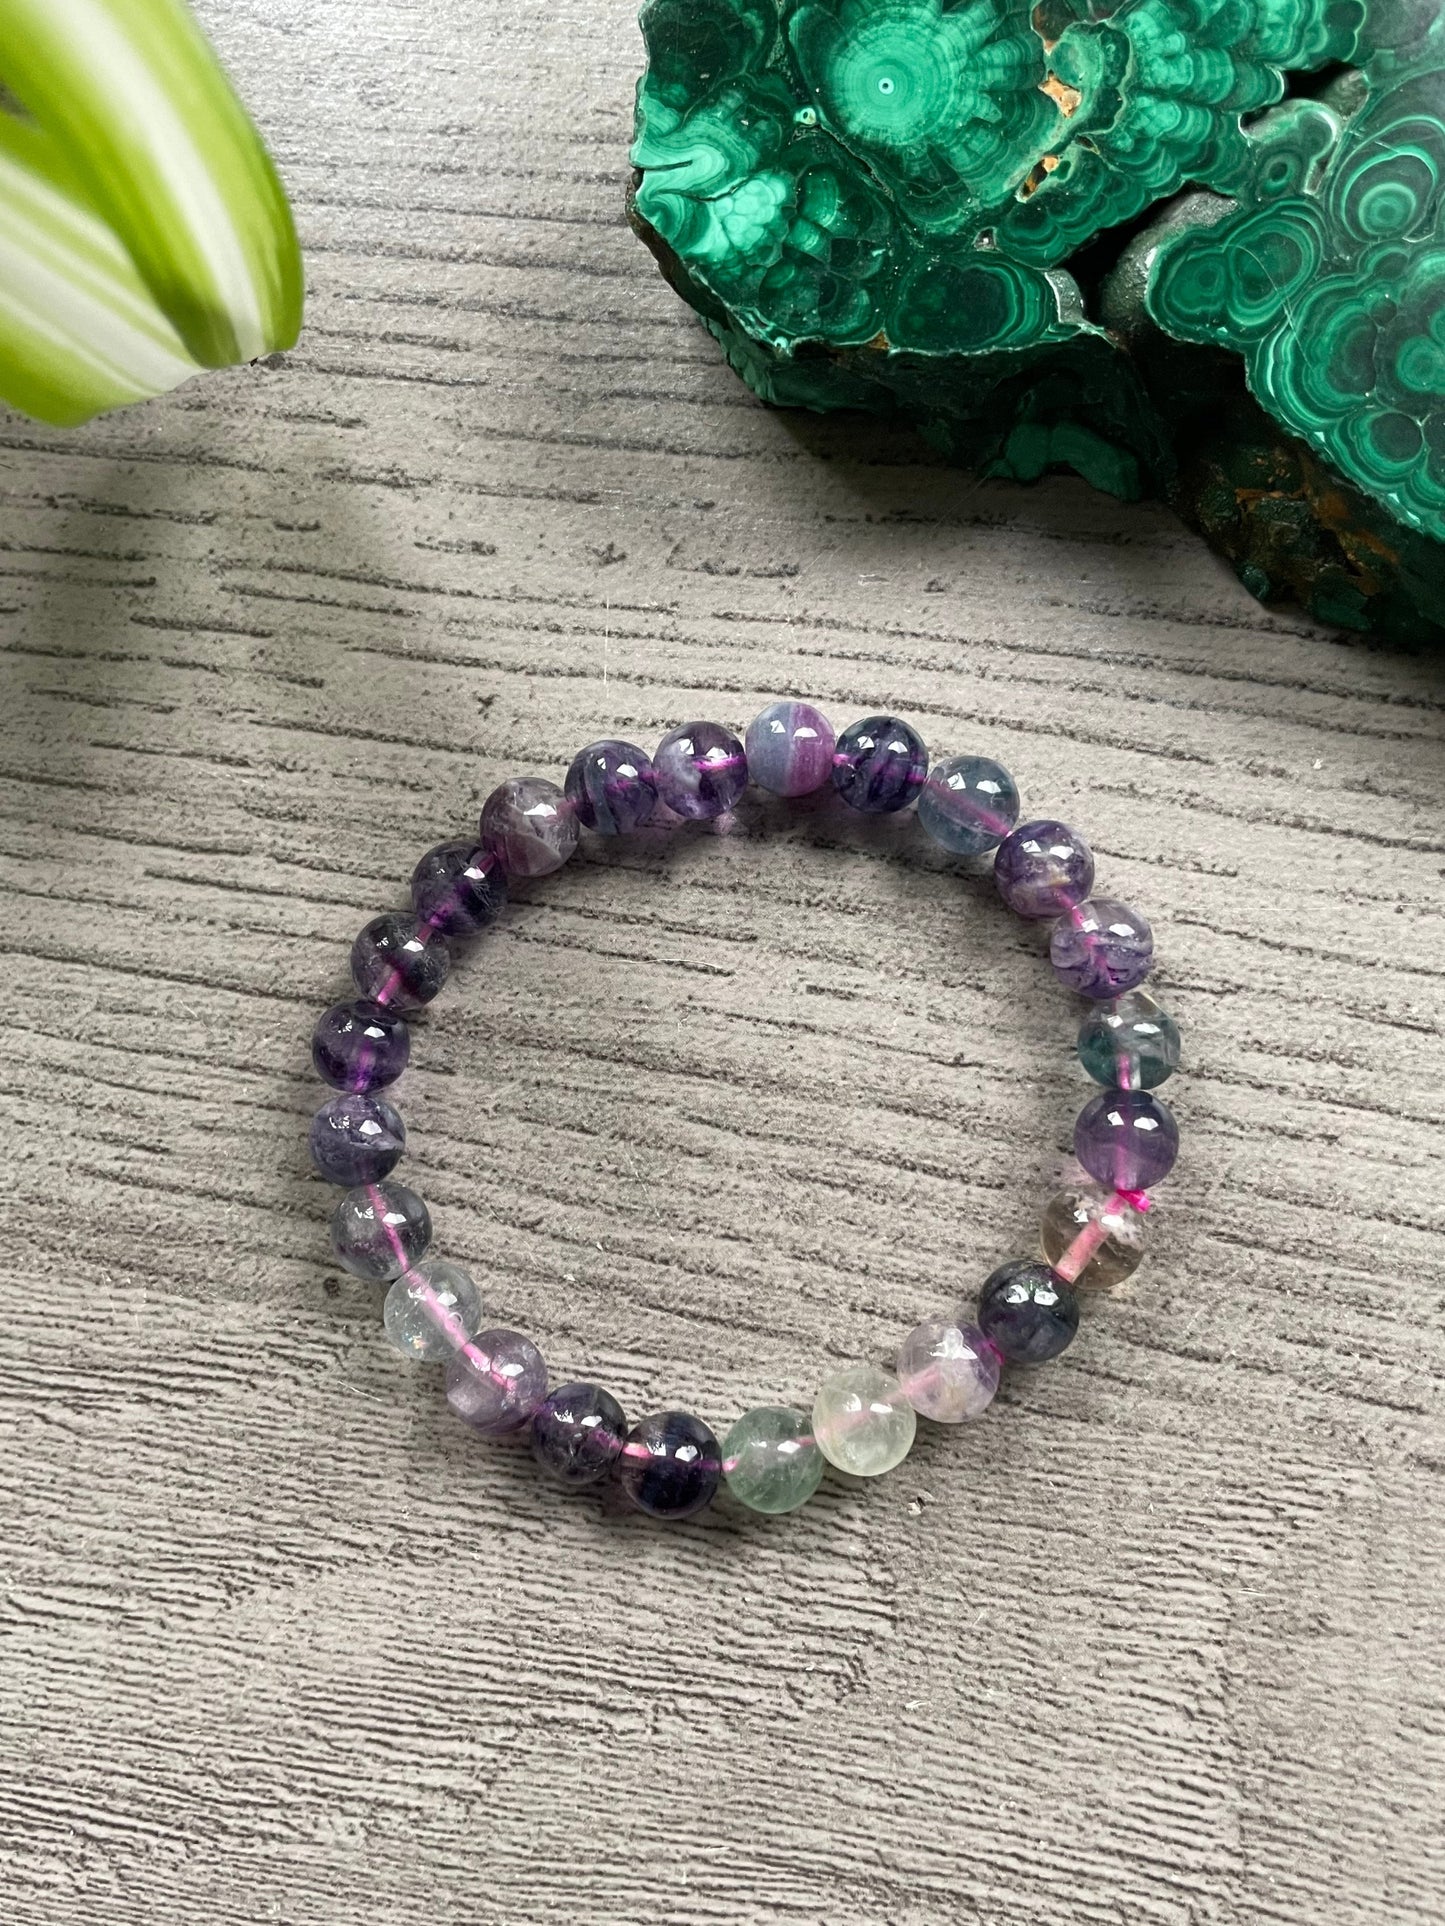 Pictured is a rainbow fluorite bead bracelet.